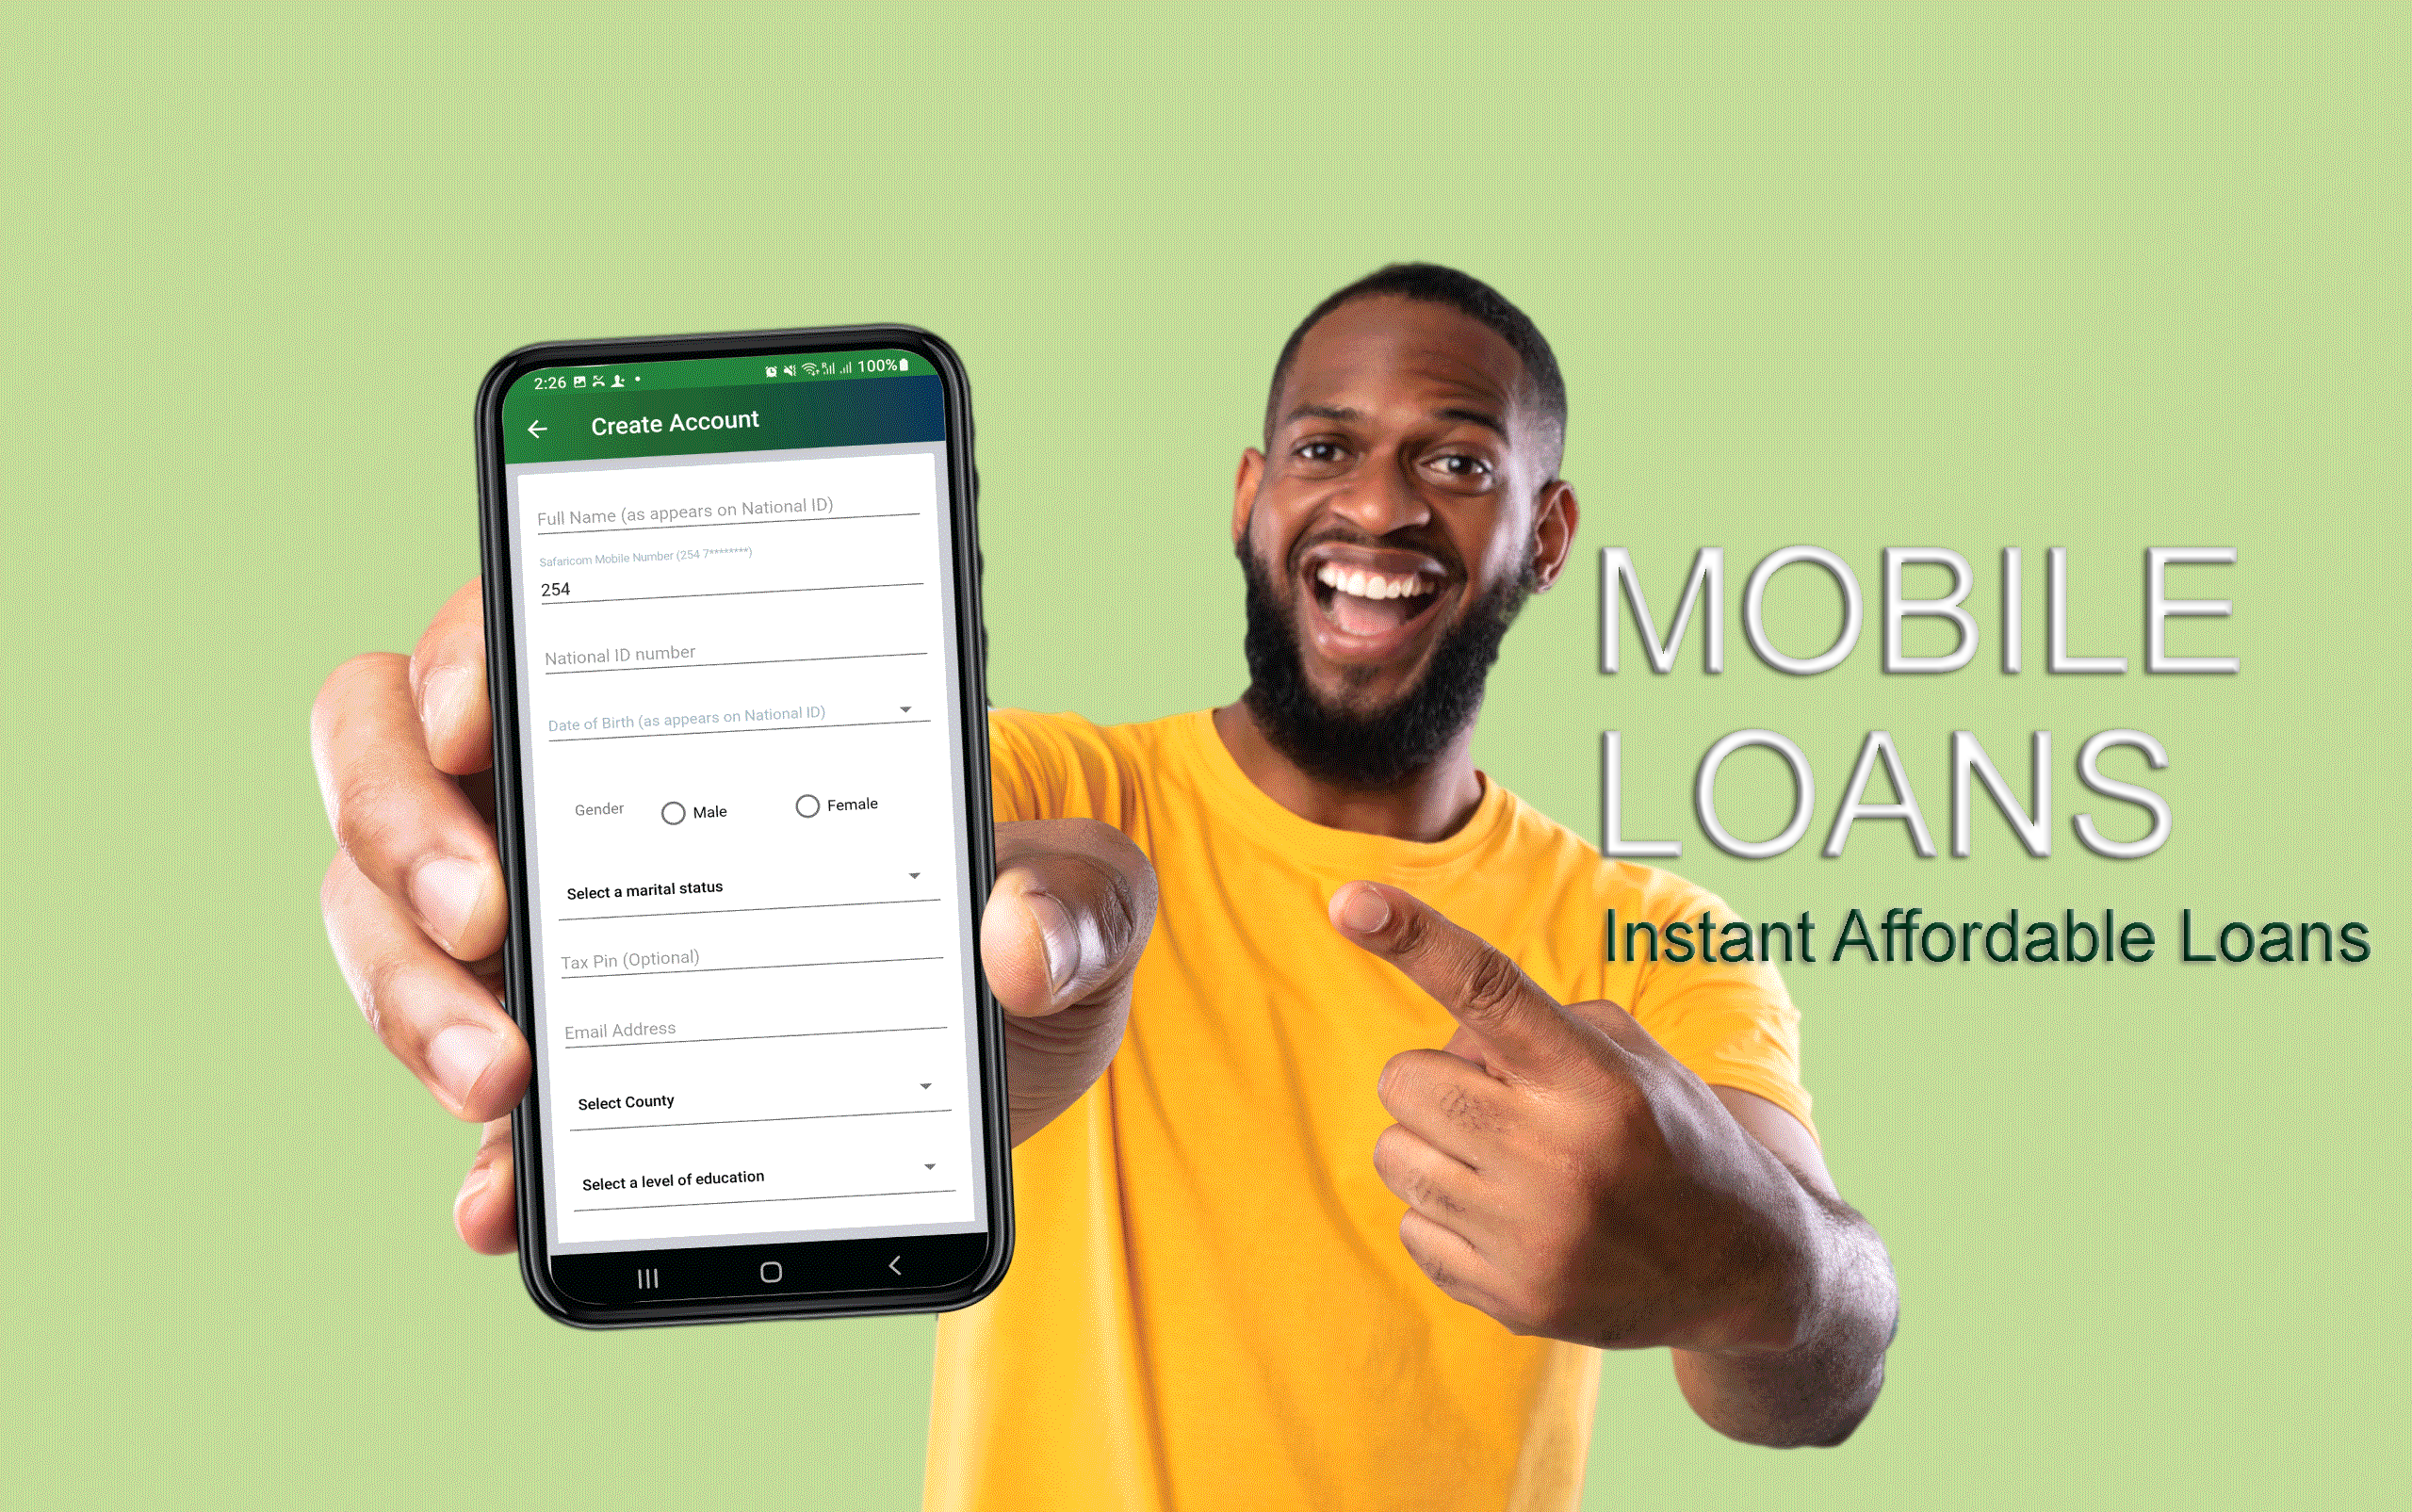 Instant affordable loans